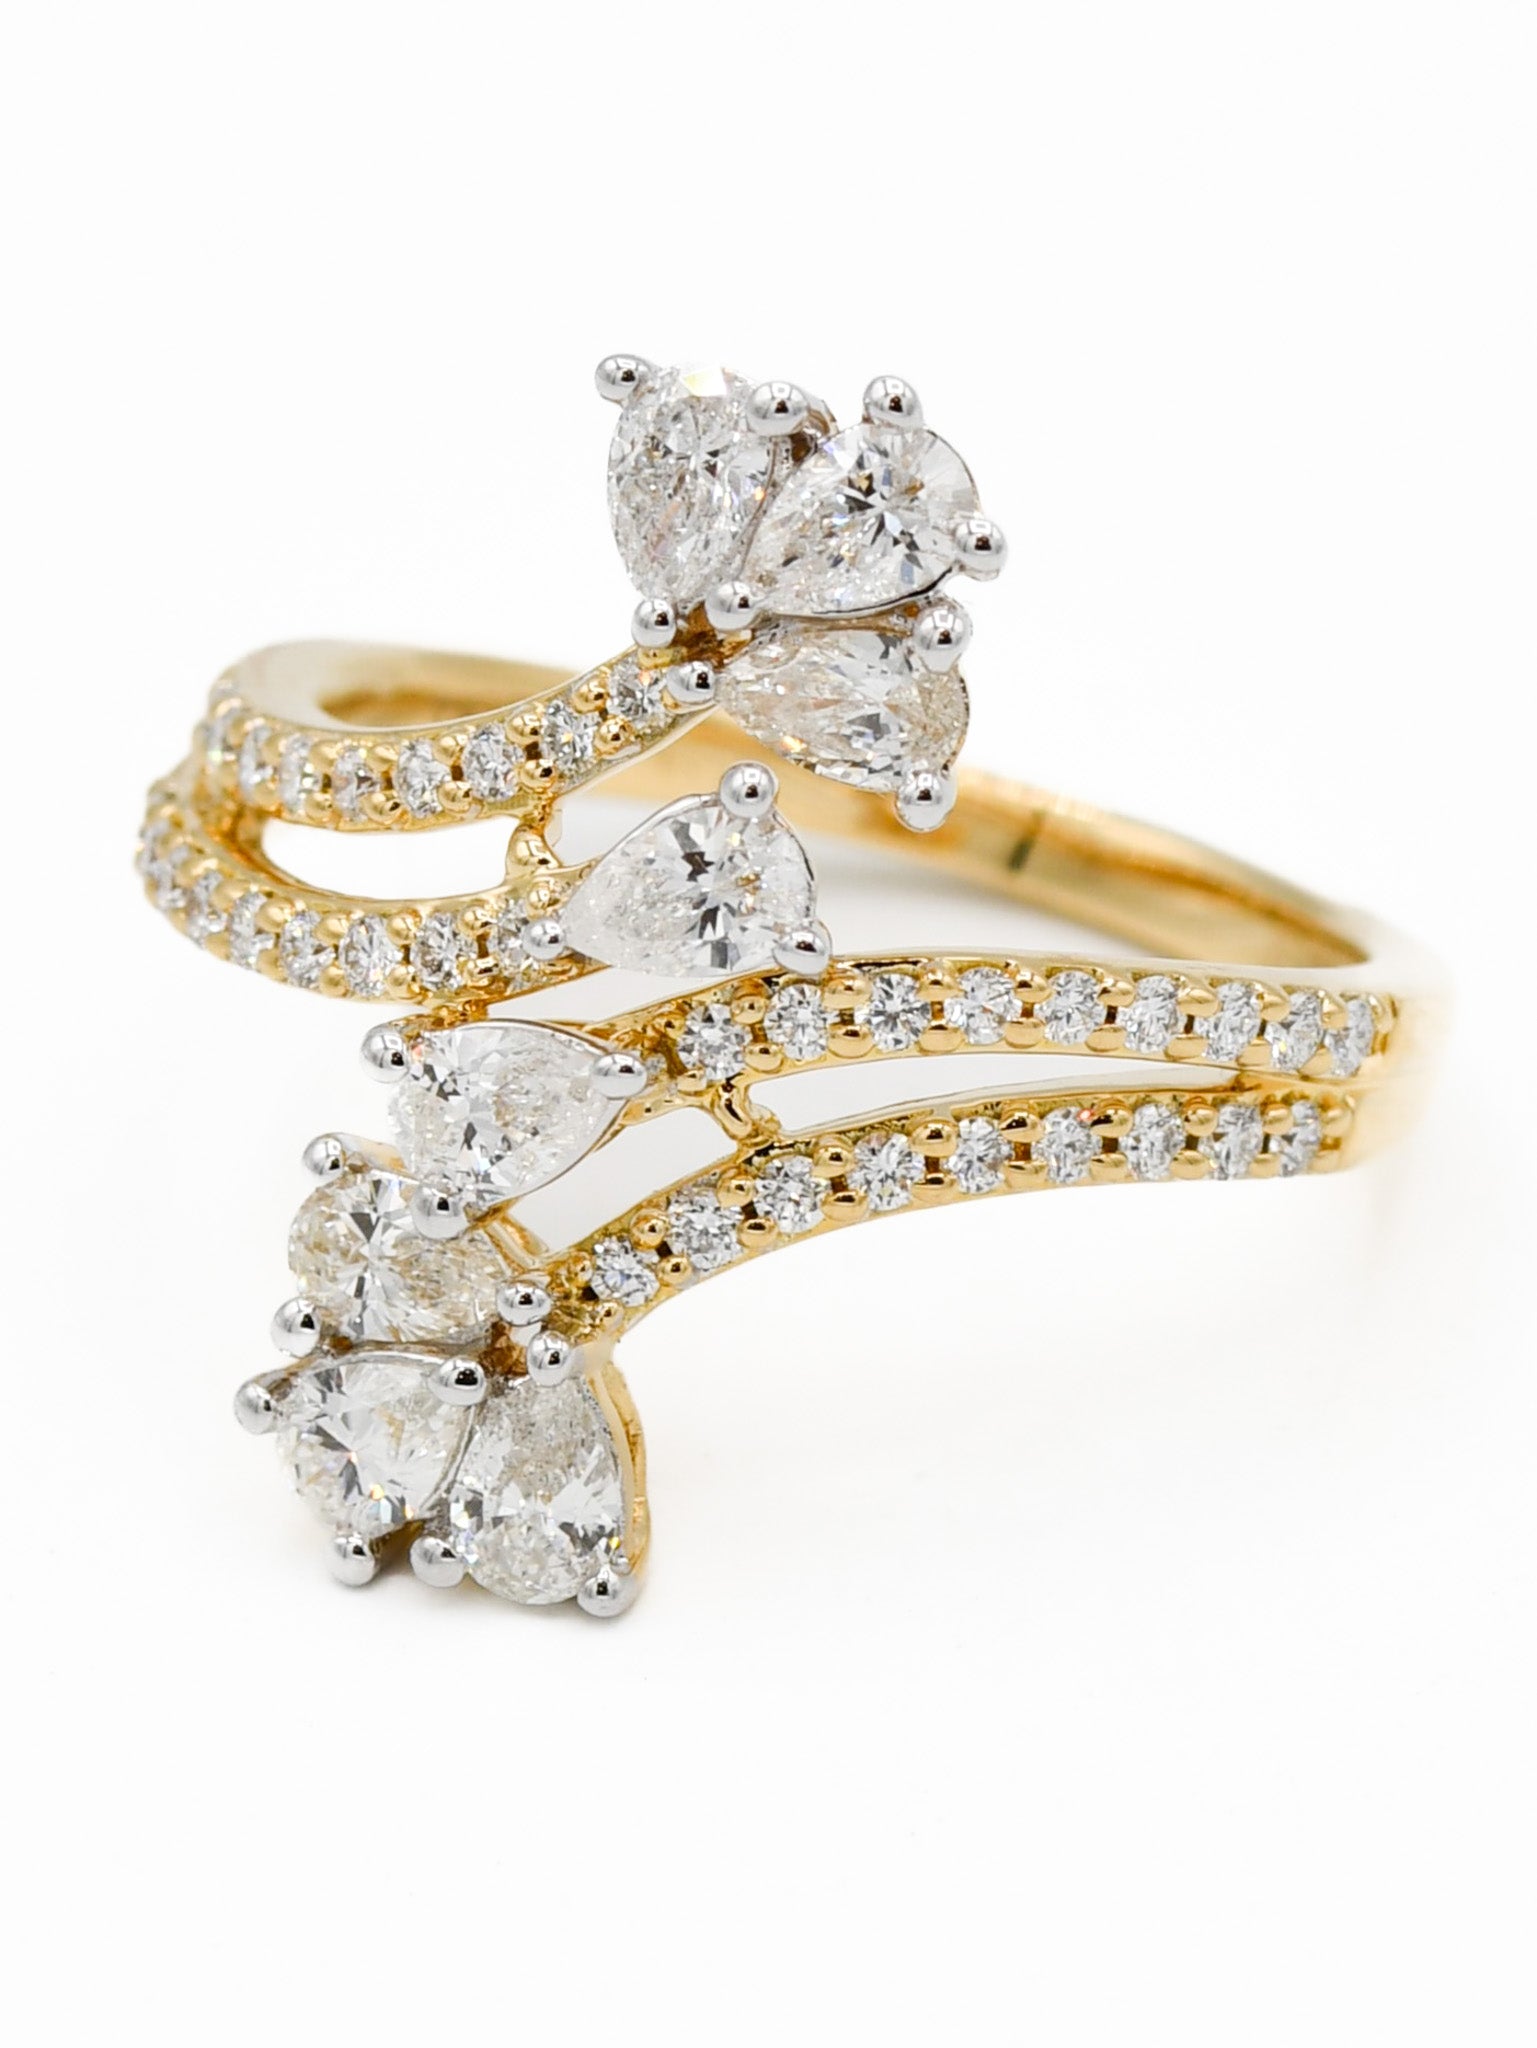 18ct Gold 1.19ct Diamond Ladies Ring - Roop Darshan